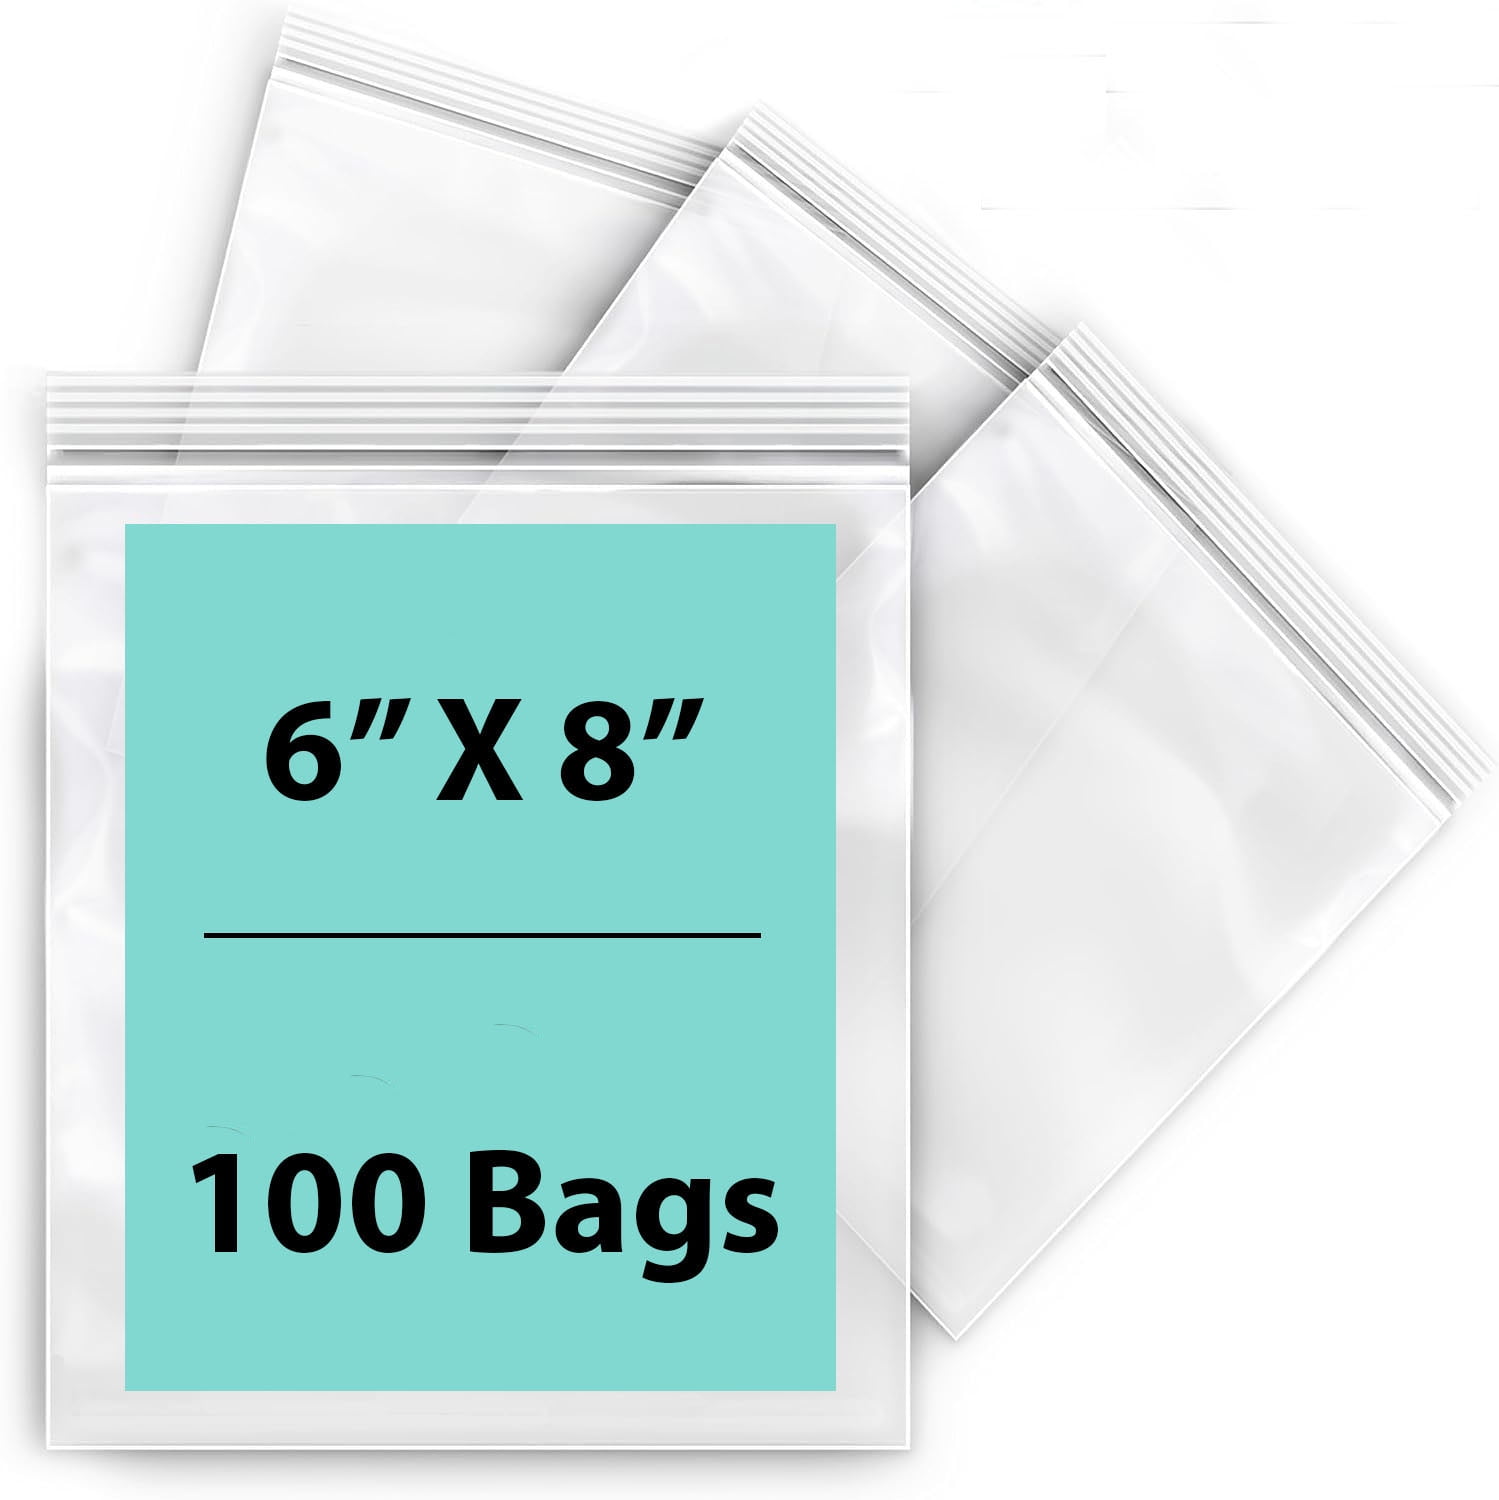 4x4 Plastic Zip Top Bags (Pack of 100)